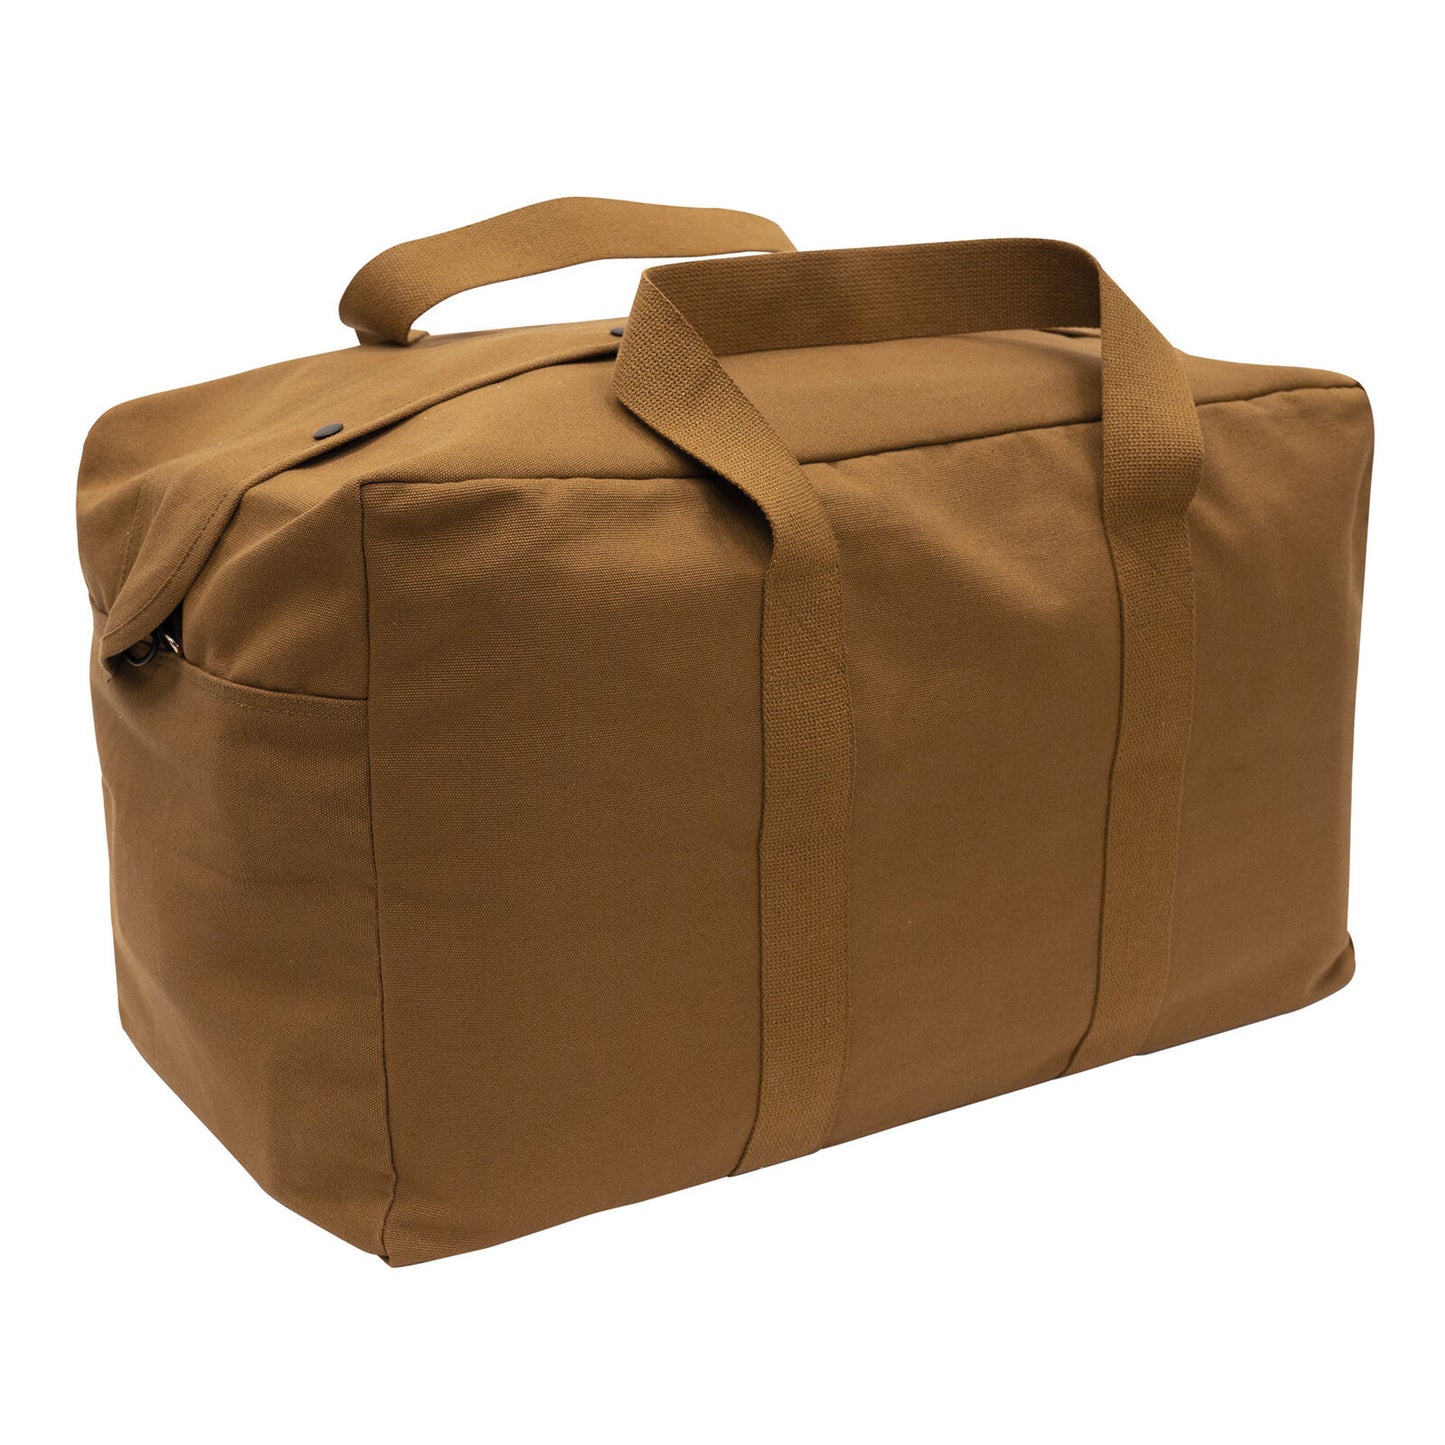 Canvas Parachute Cargo Bag In Work Brown 24"x15"x13" - Twin Handle Duffle Bag